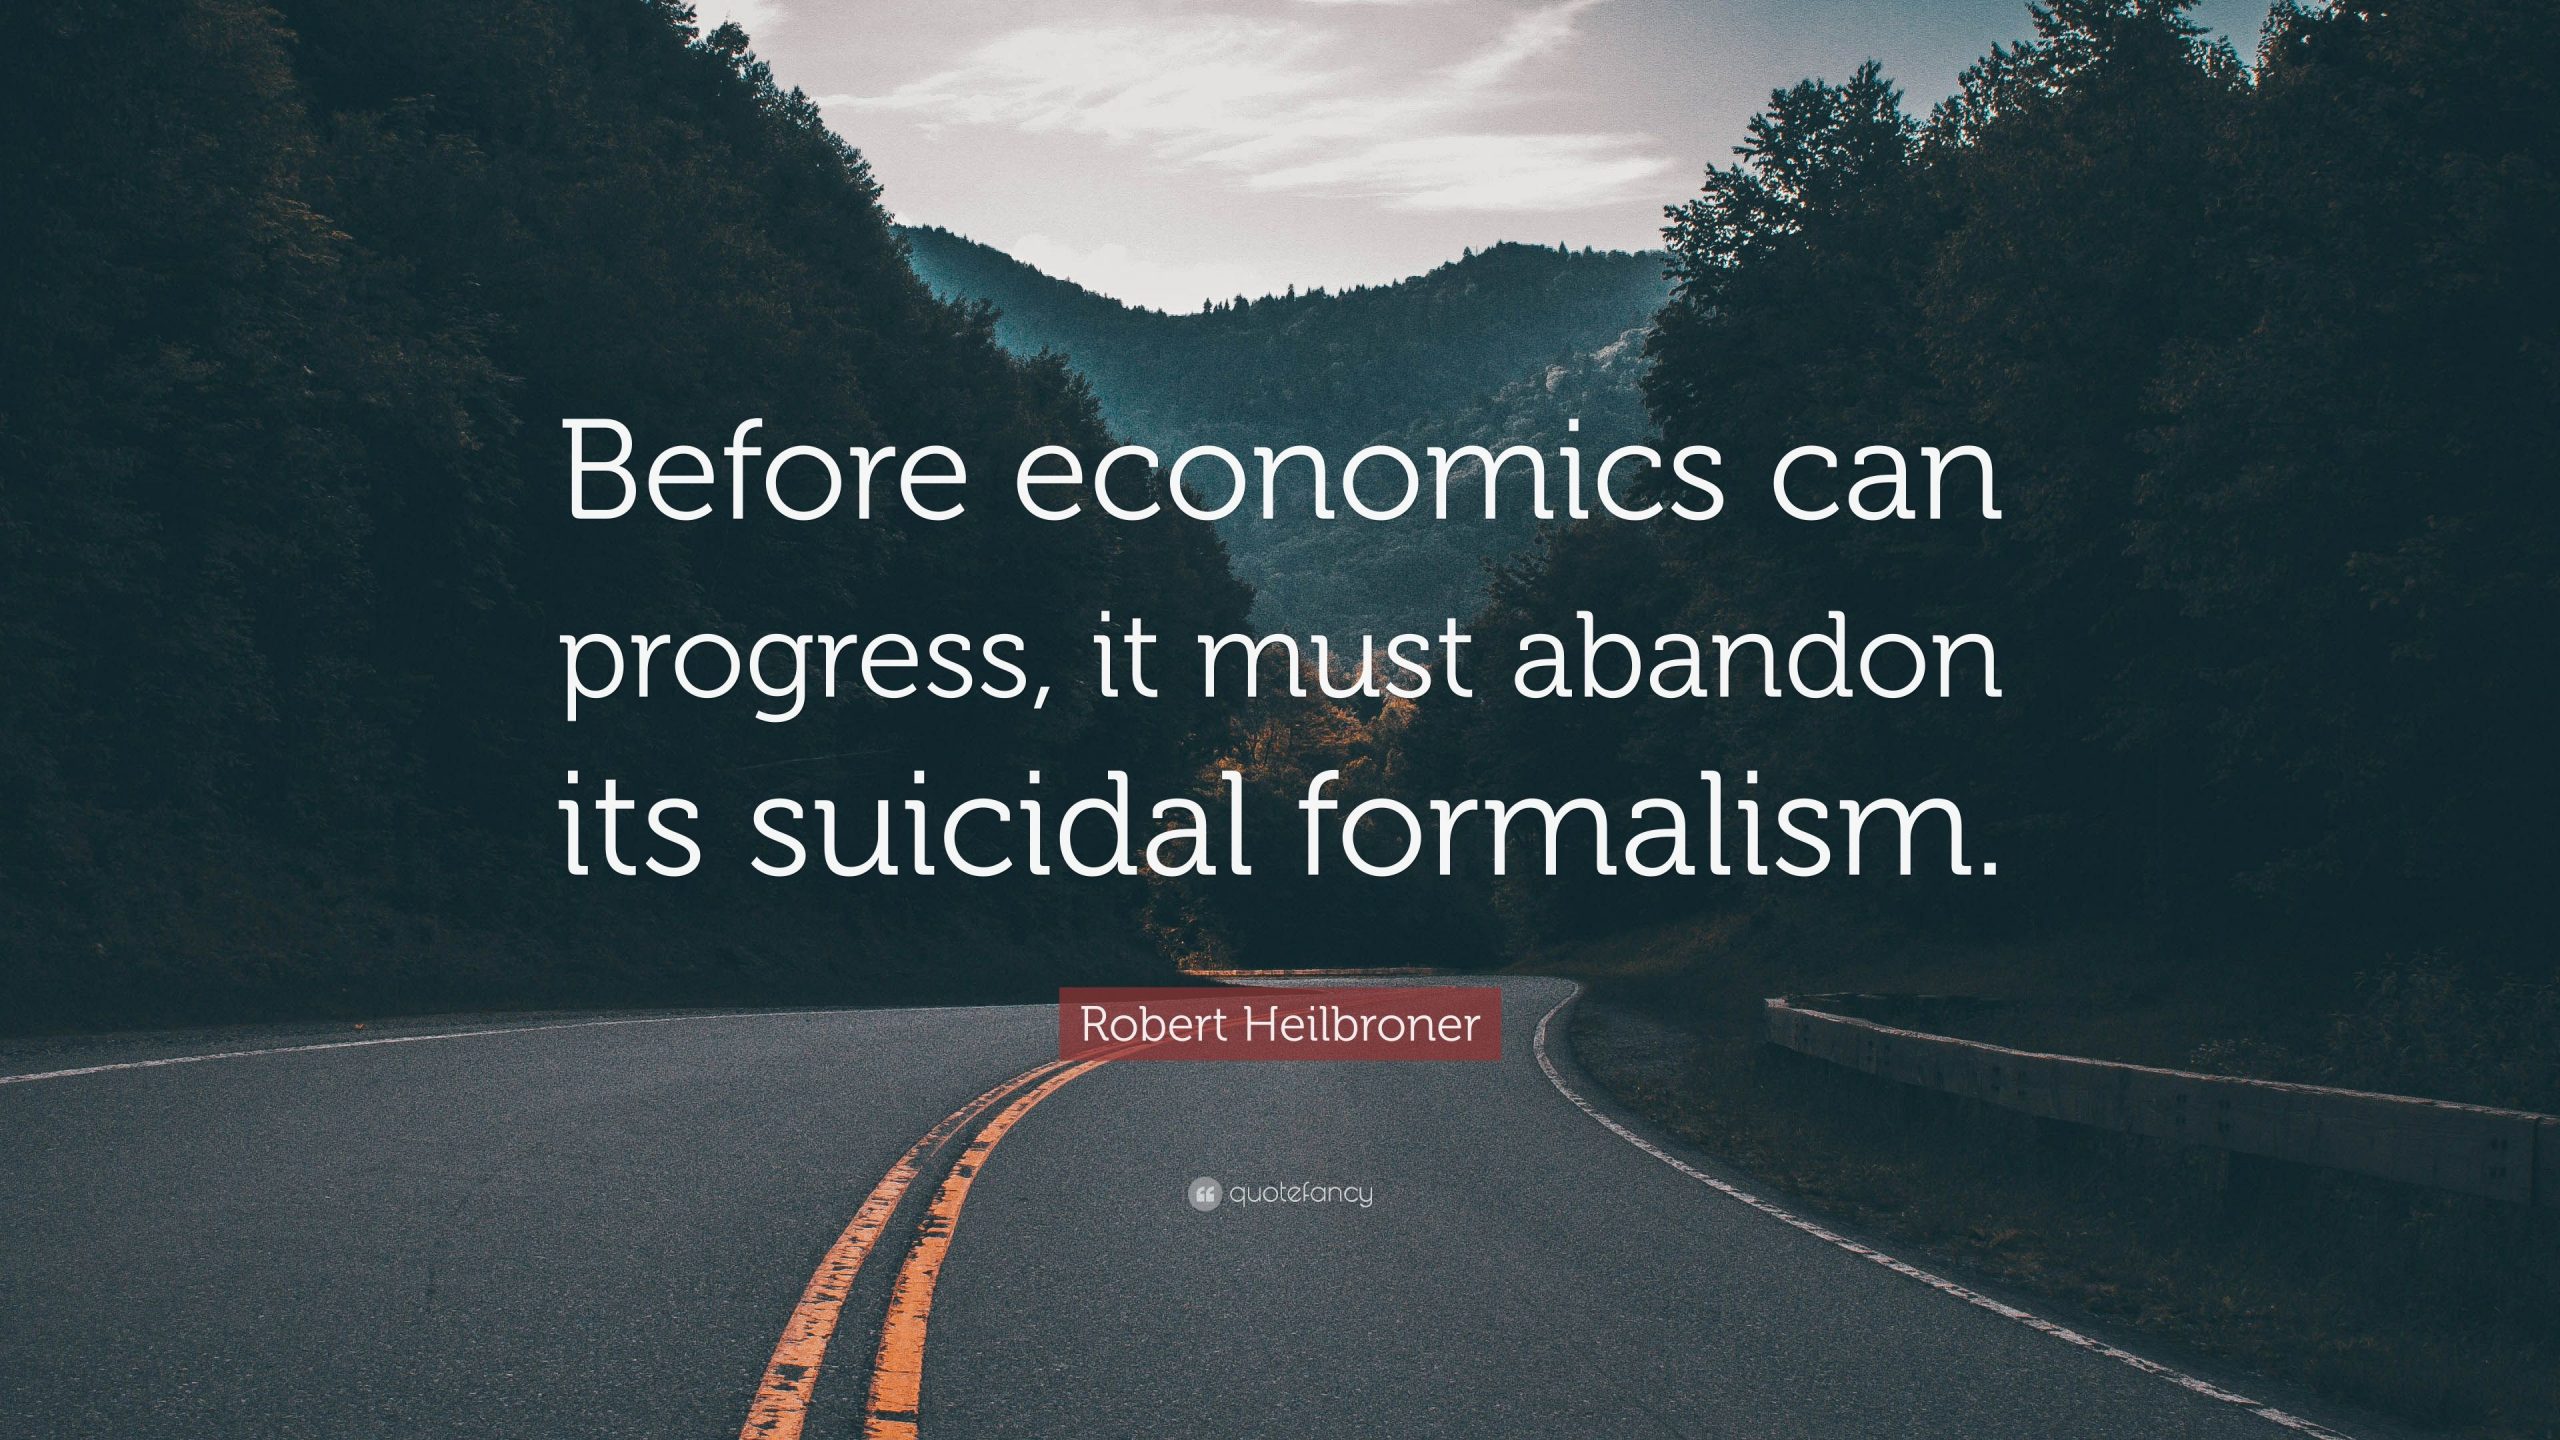 Reforming economics